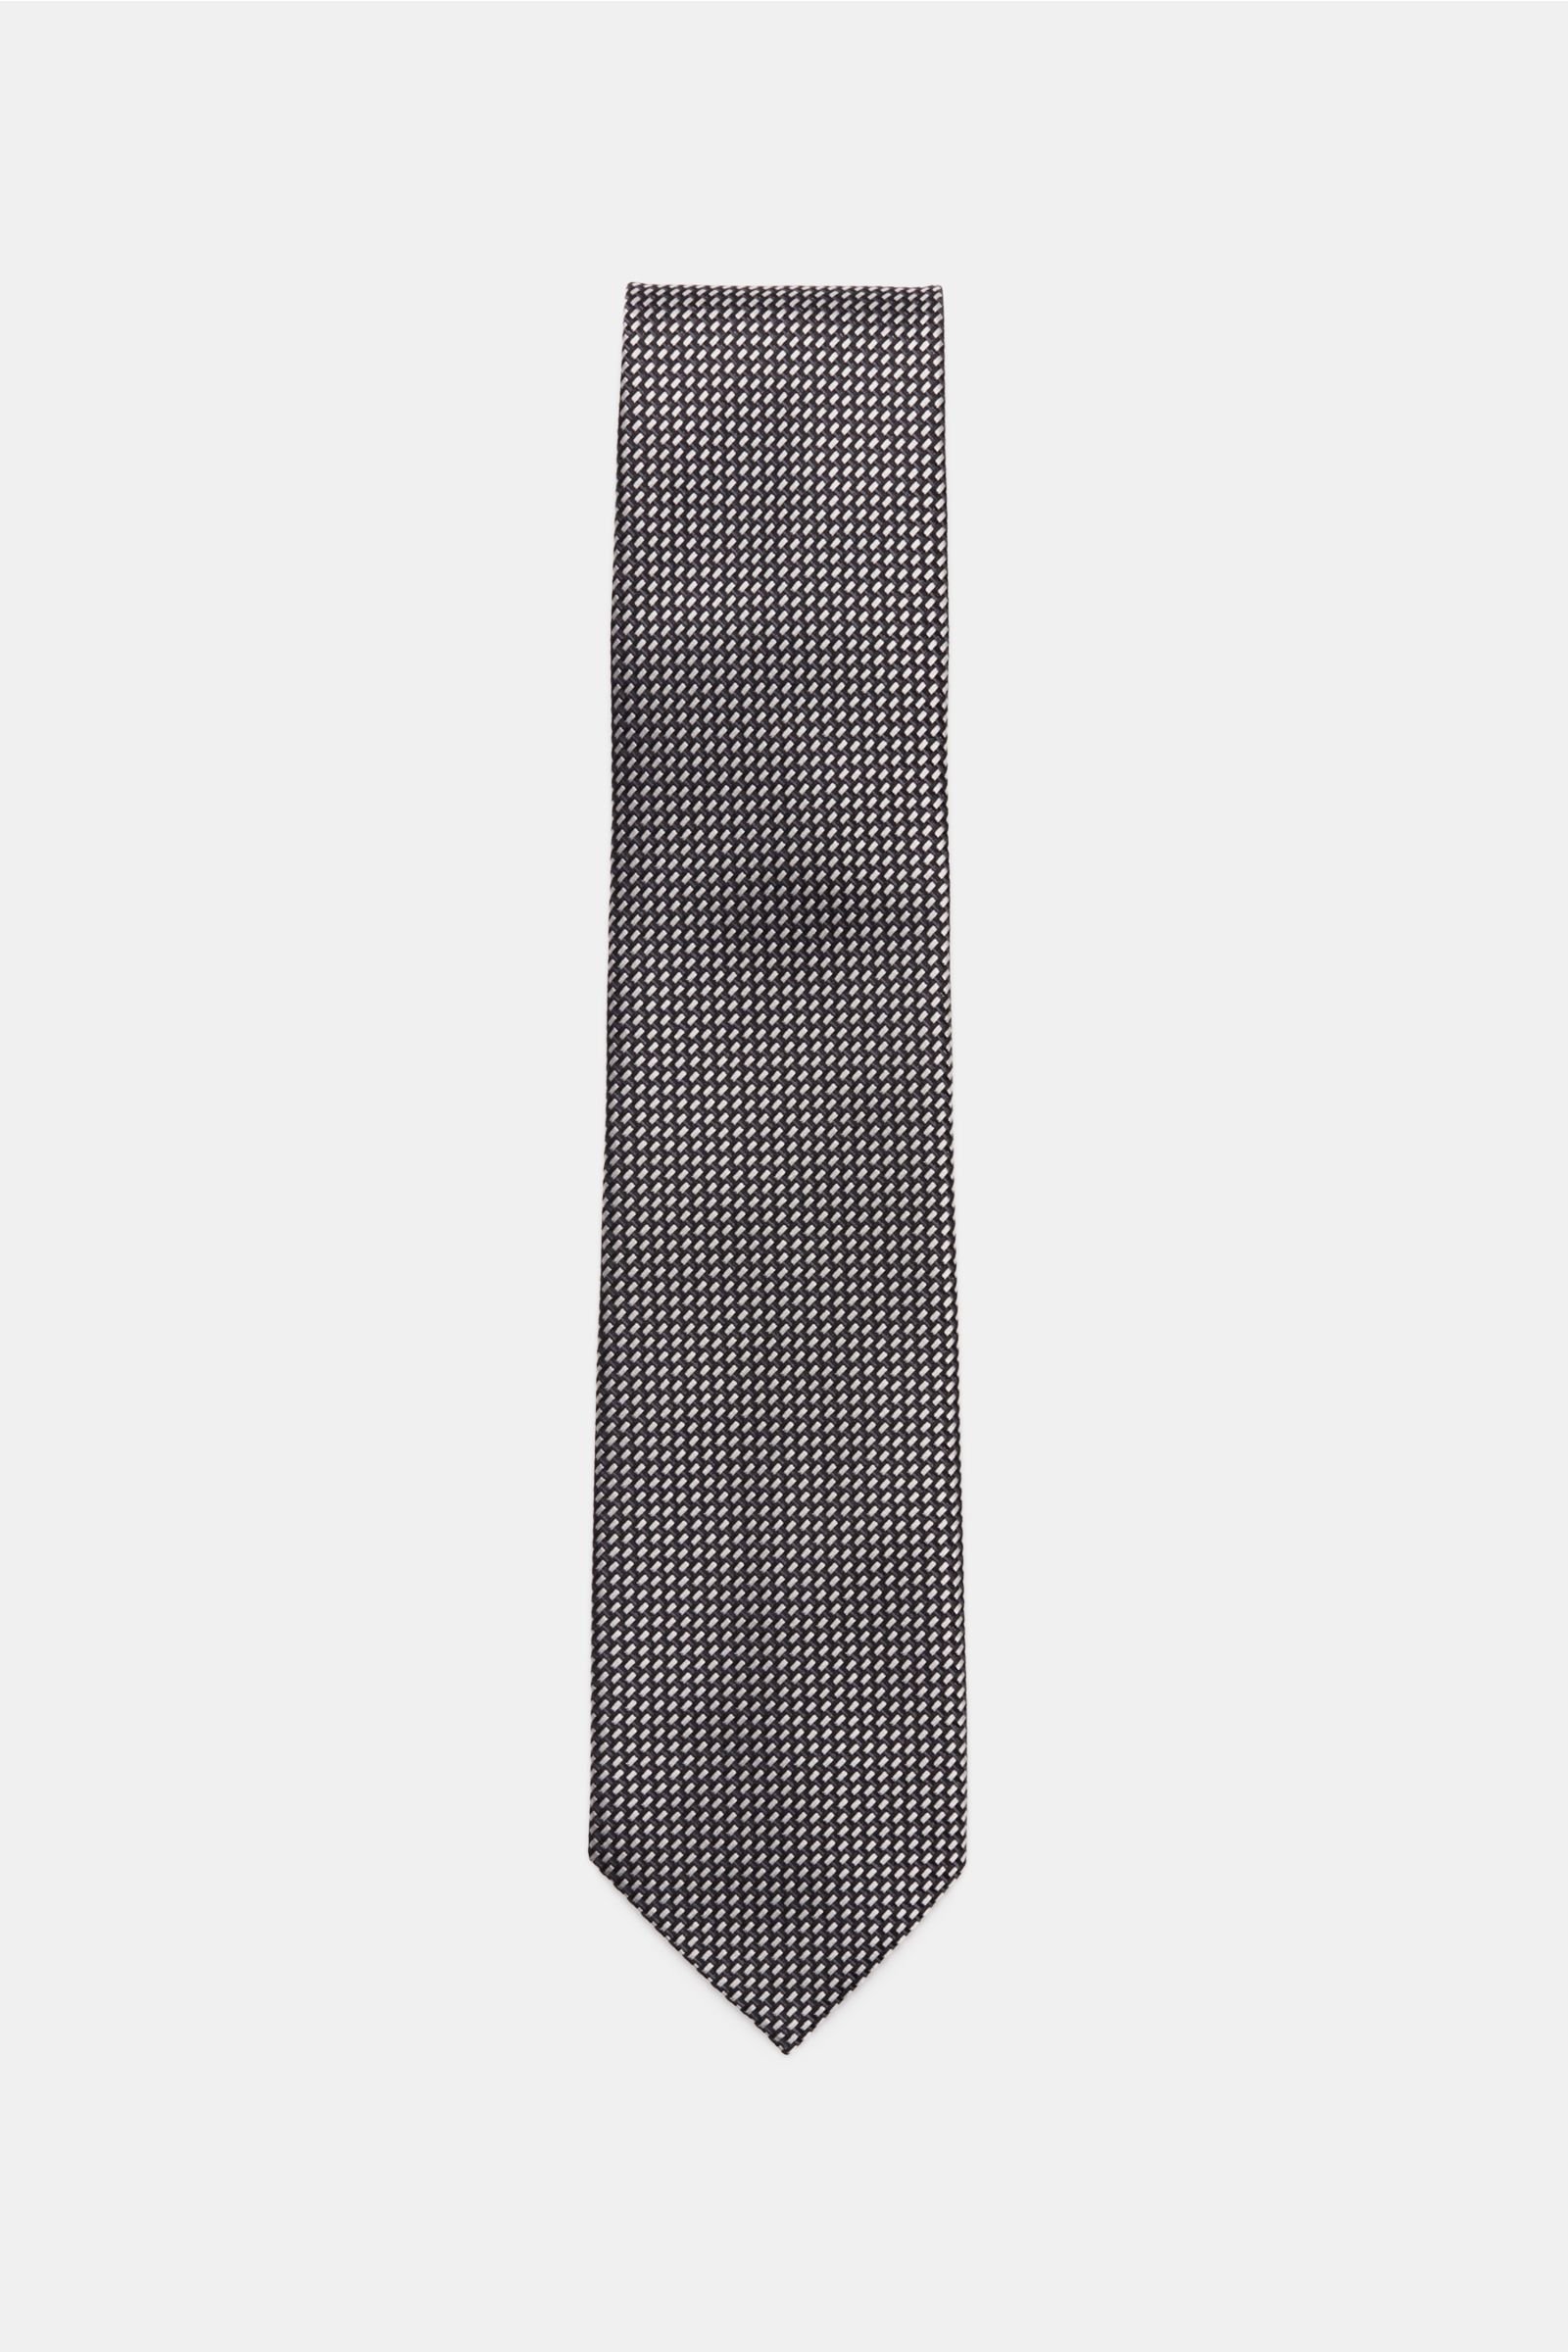 Silk tie black/light grey patterned